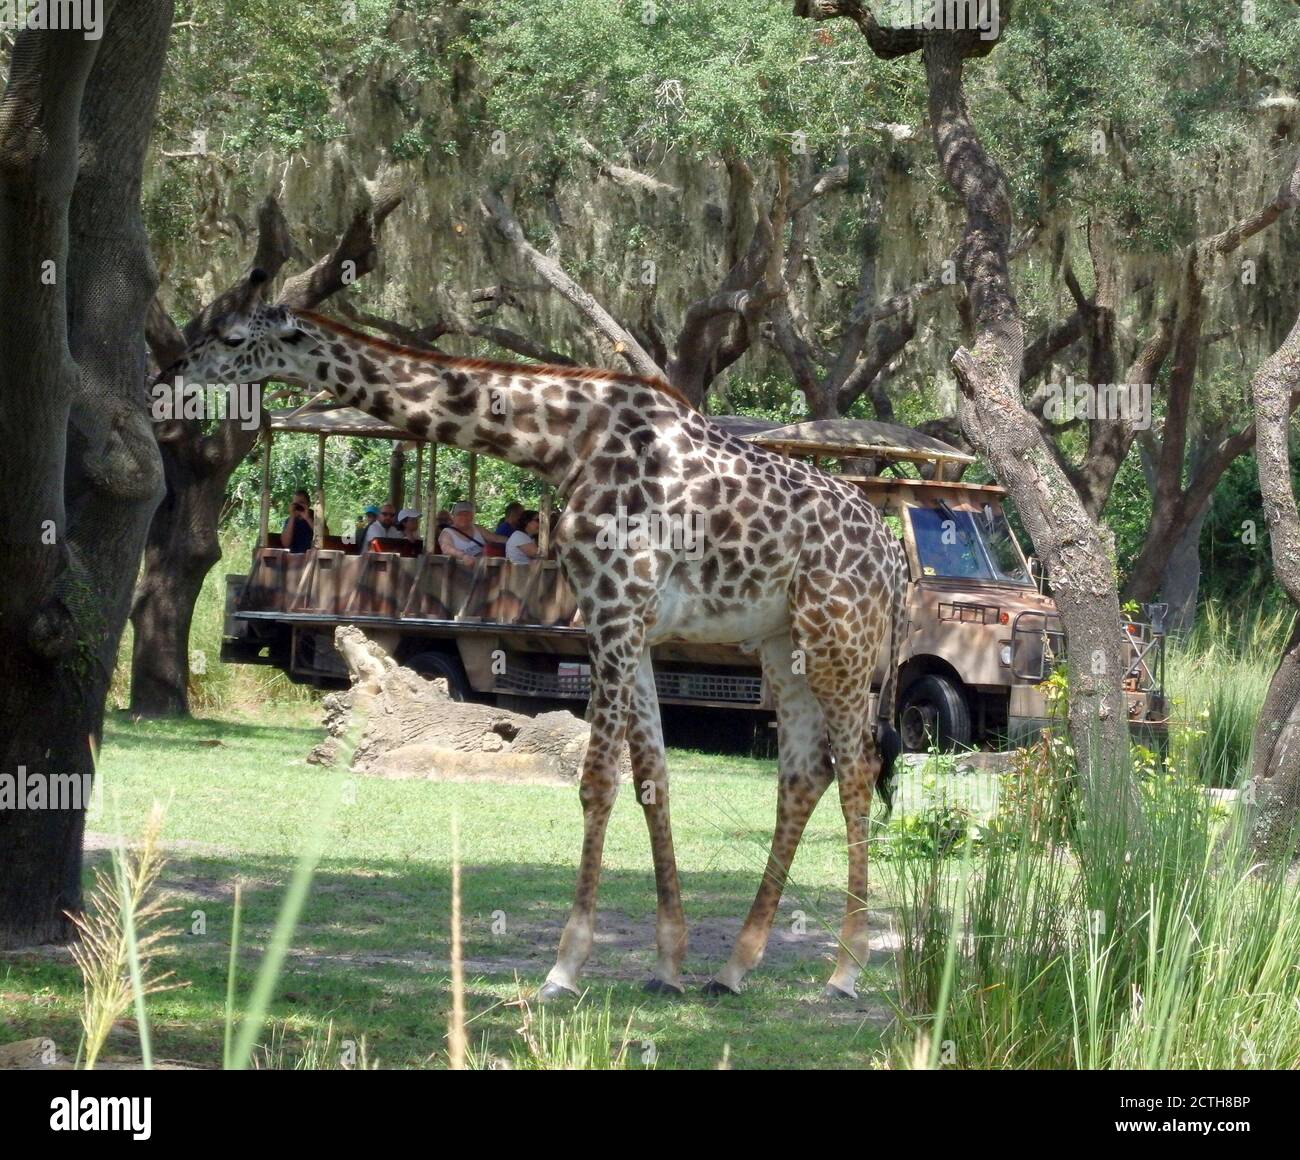 Safari tour with giraffes, Animal Kingdom, Walt Disney World, Orlando, Florida, United States Stock Photo